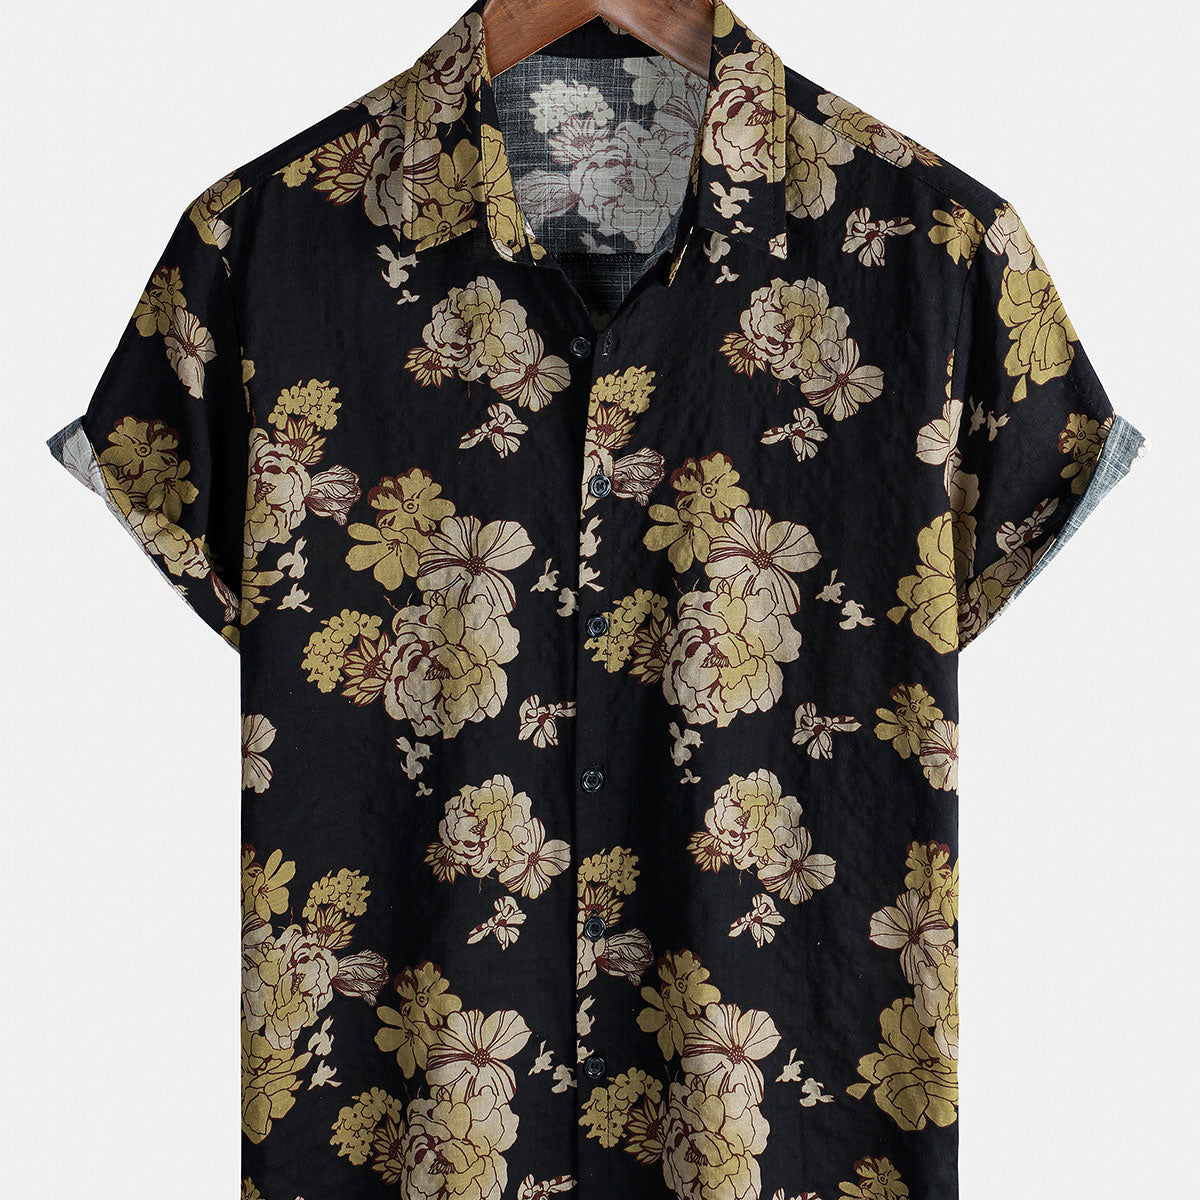 Men's Casual Vintage Floral Cotton Camp Short Sleeve Button Up Shirt